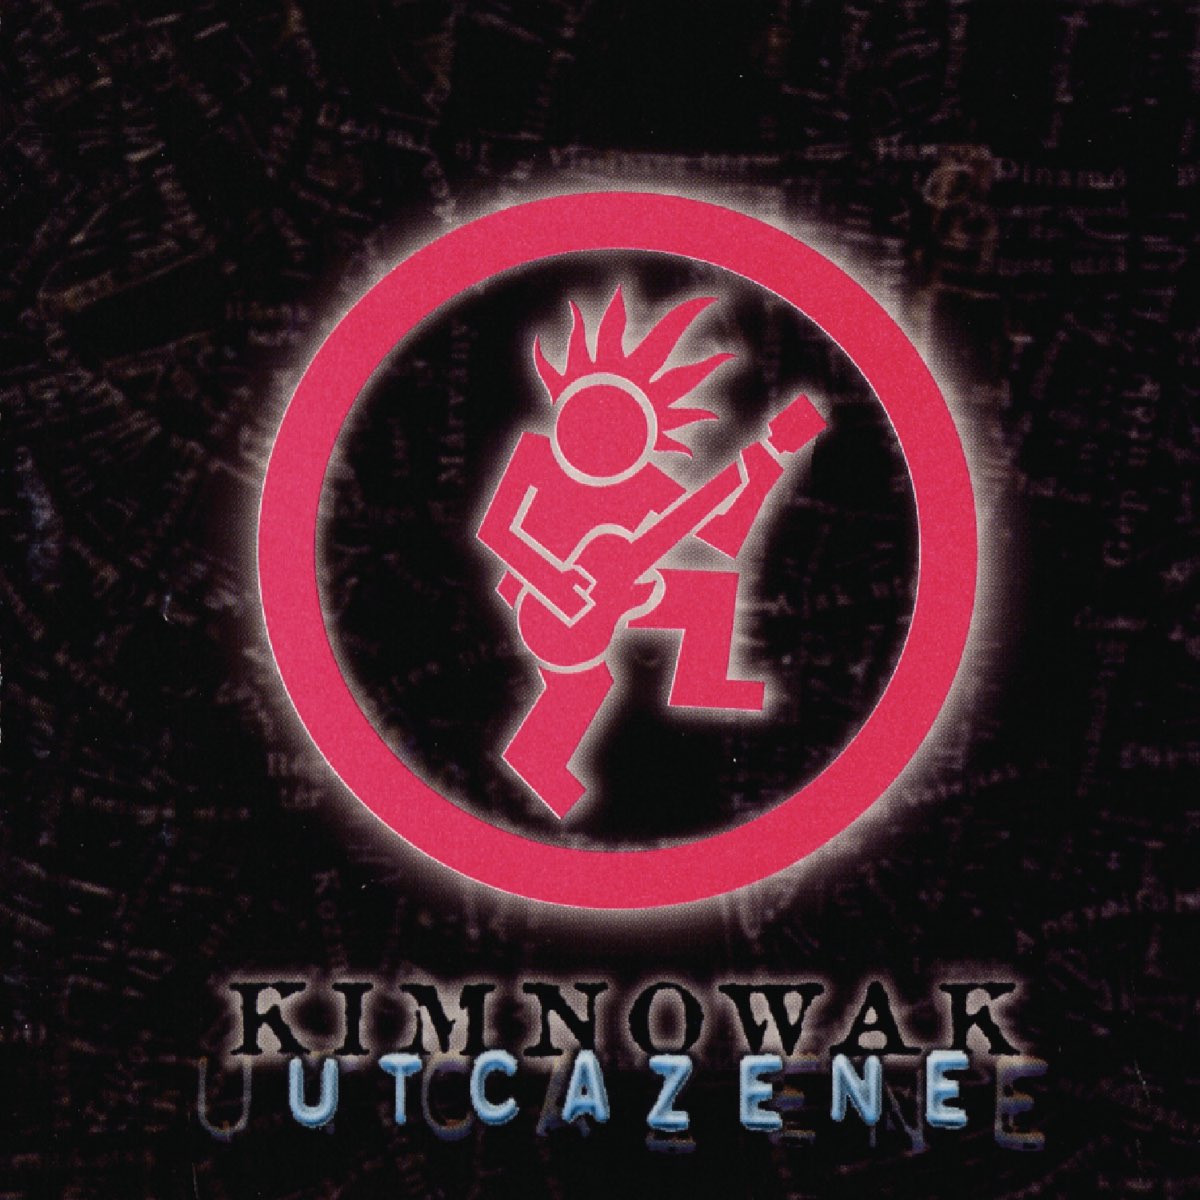 Utcazene - Album by Kimnowak - Apple Music